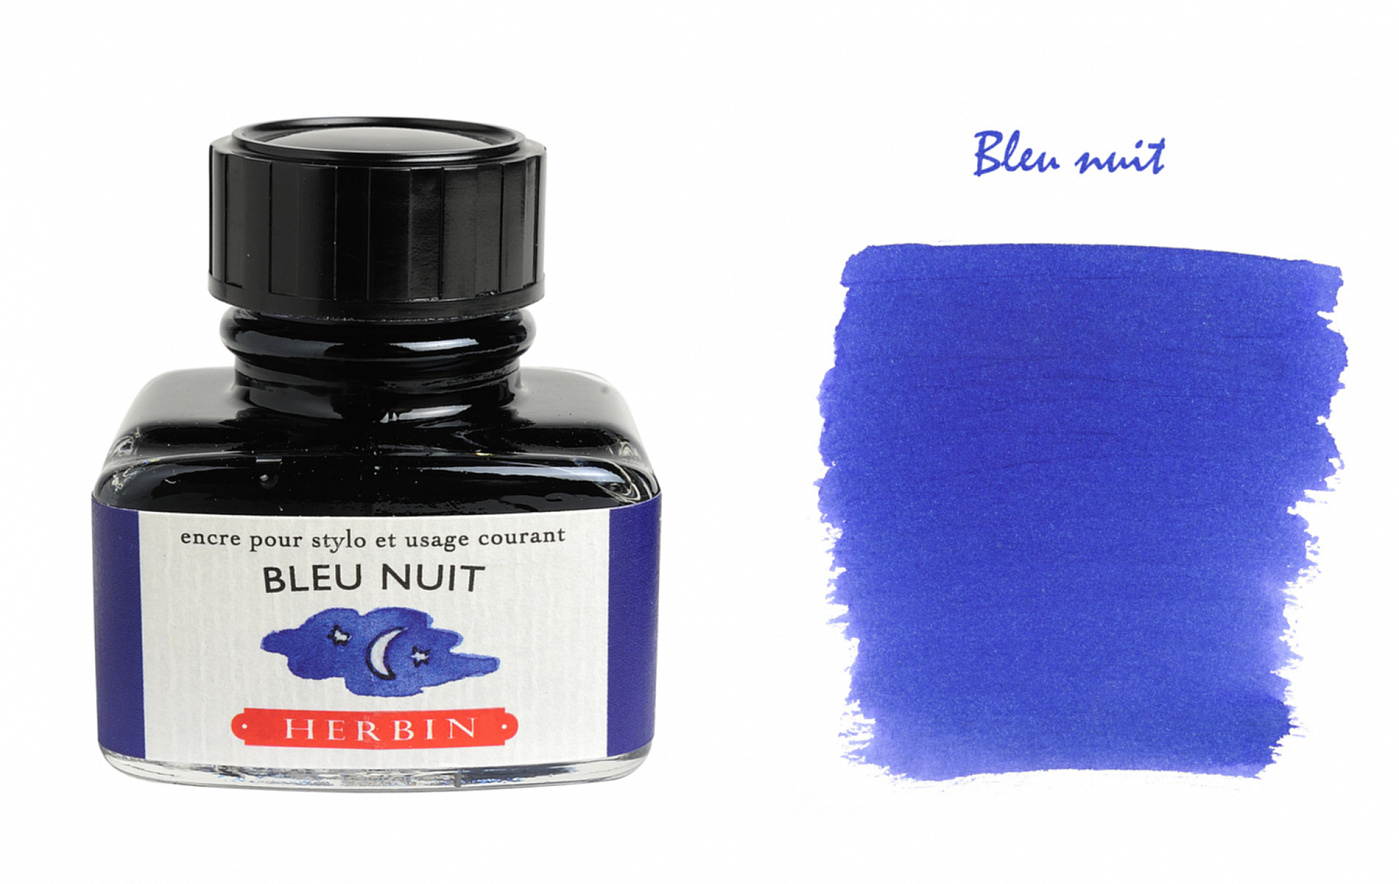 Чернила в банке Herbin, 30 мл, Bleu nuit, Темно-синий Herbin-13019T